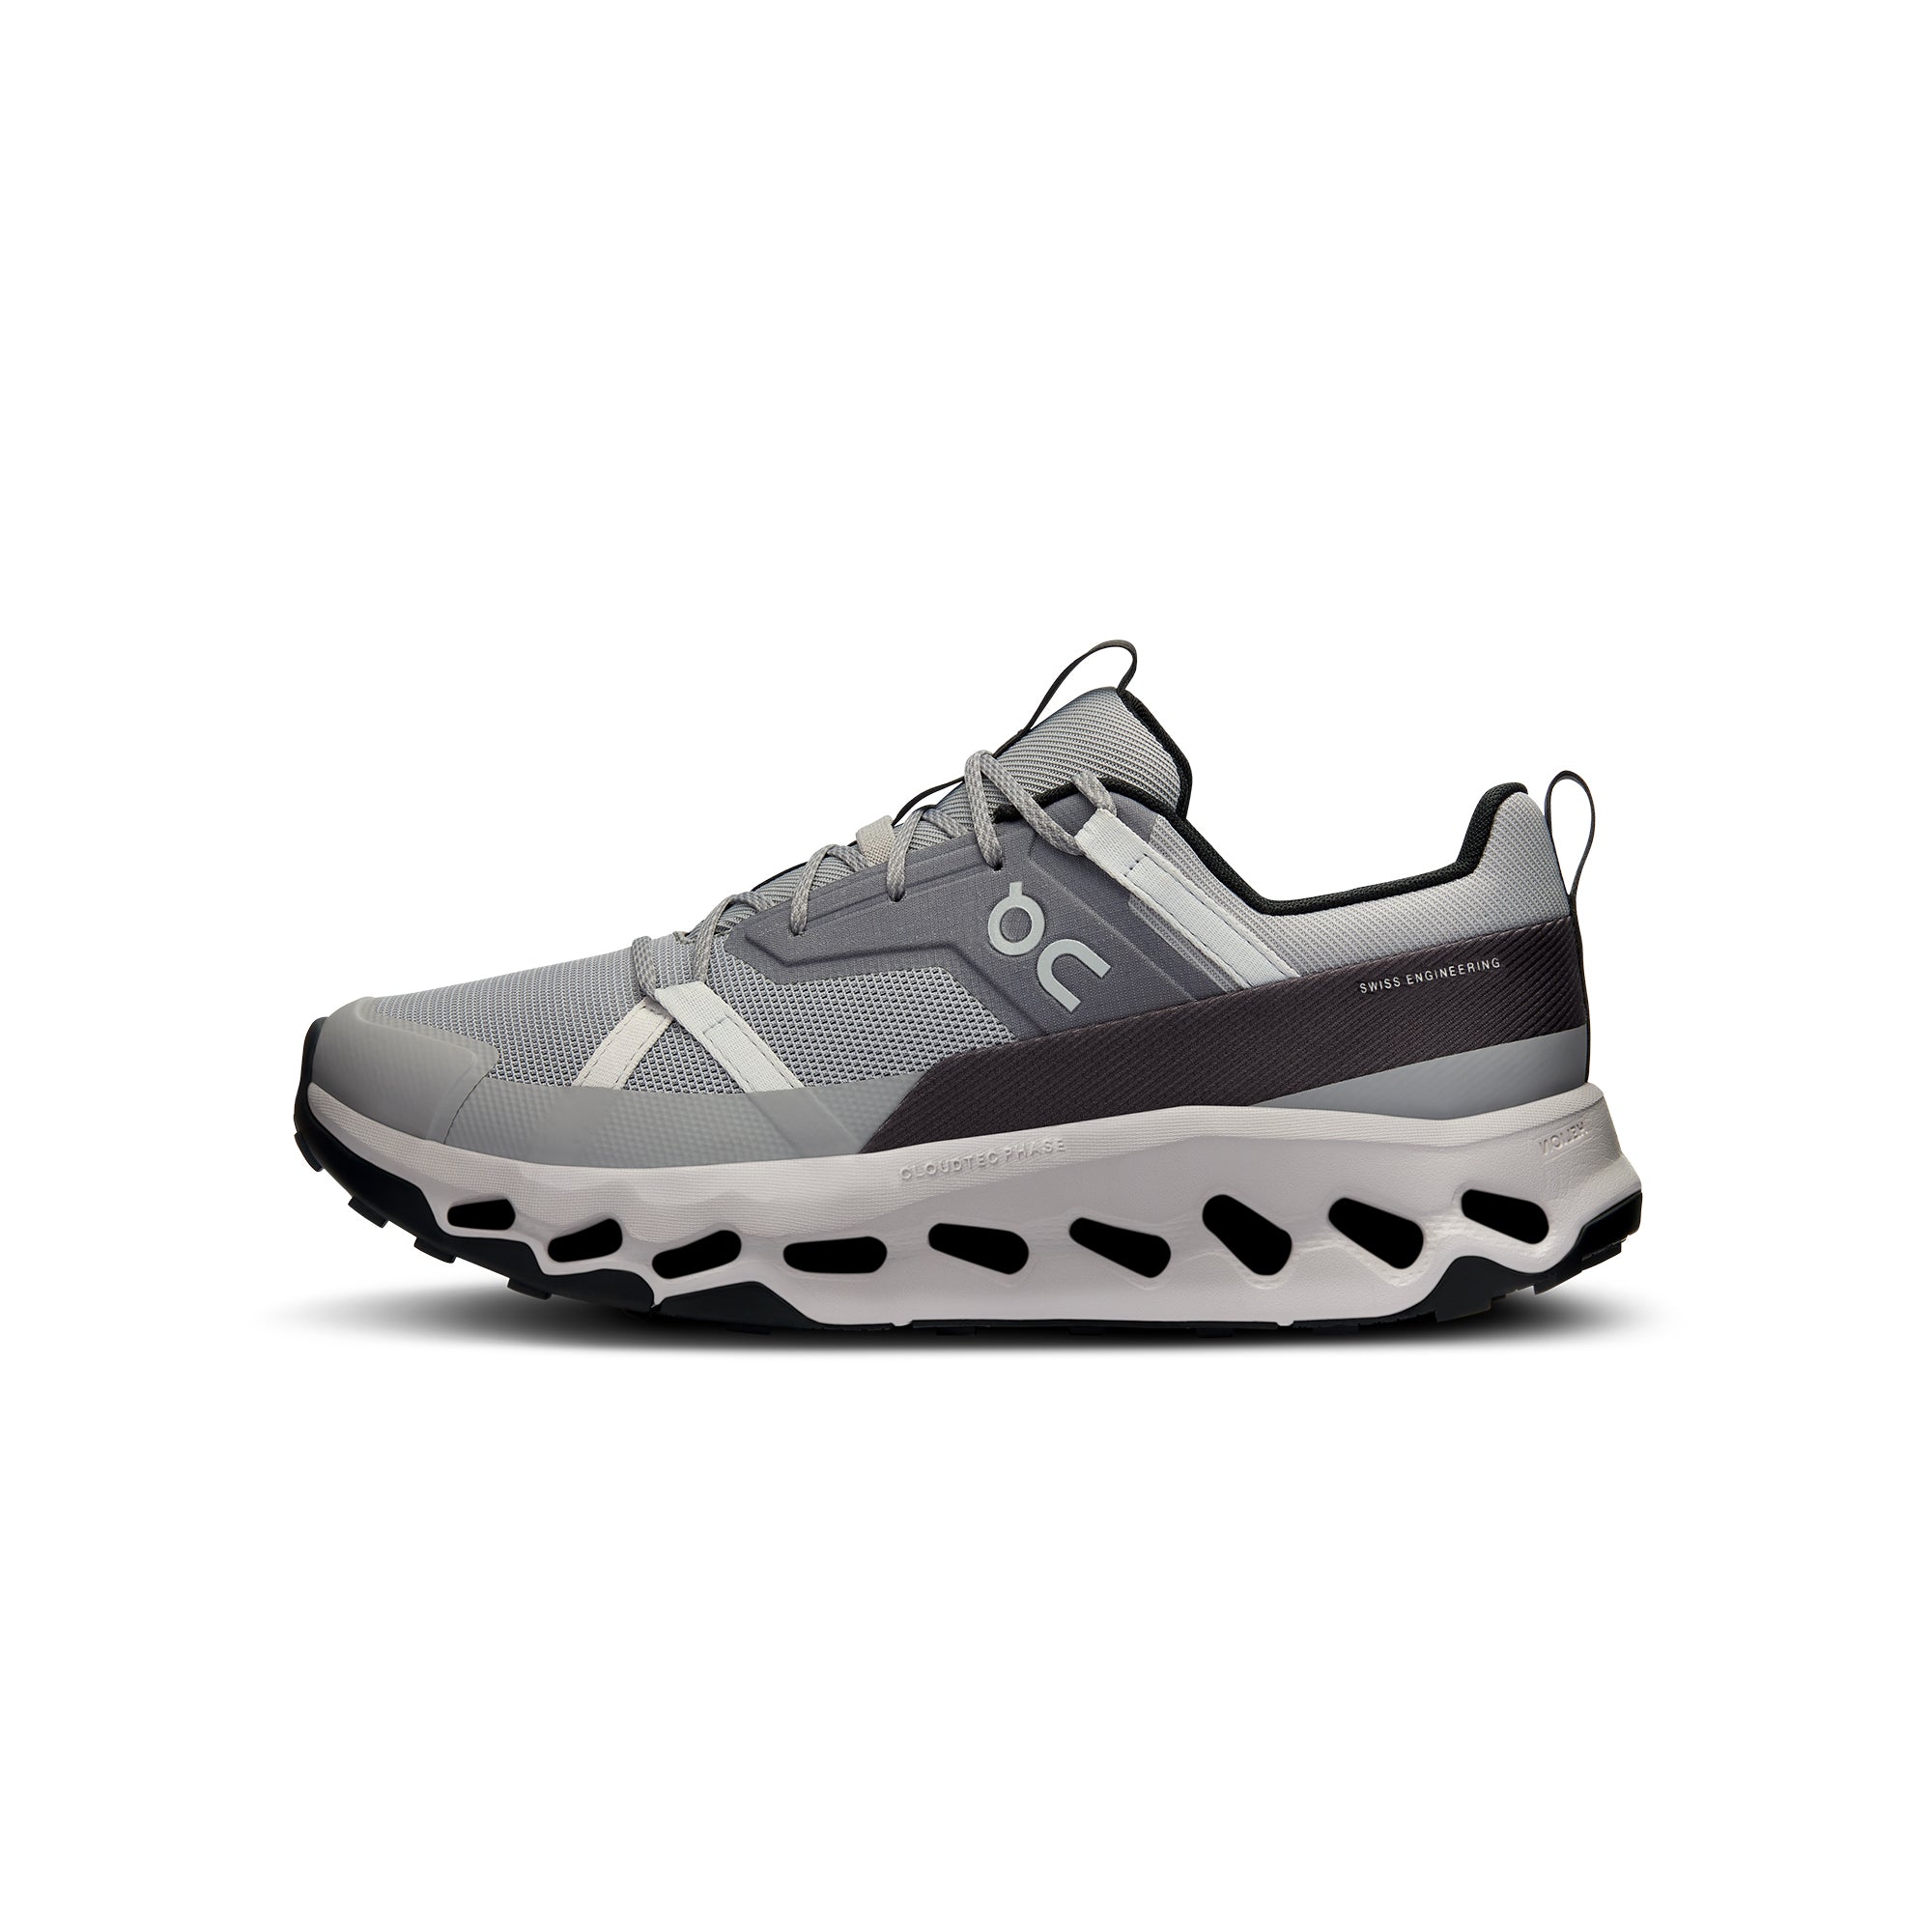 On Mens Cloudhorizon Shoes card image